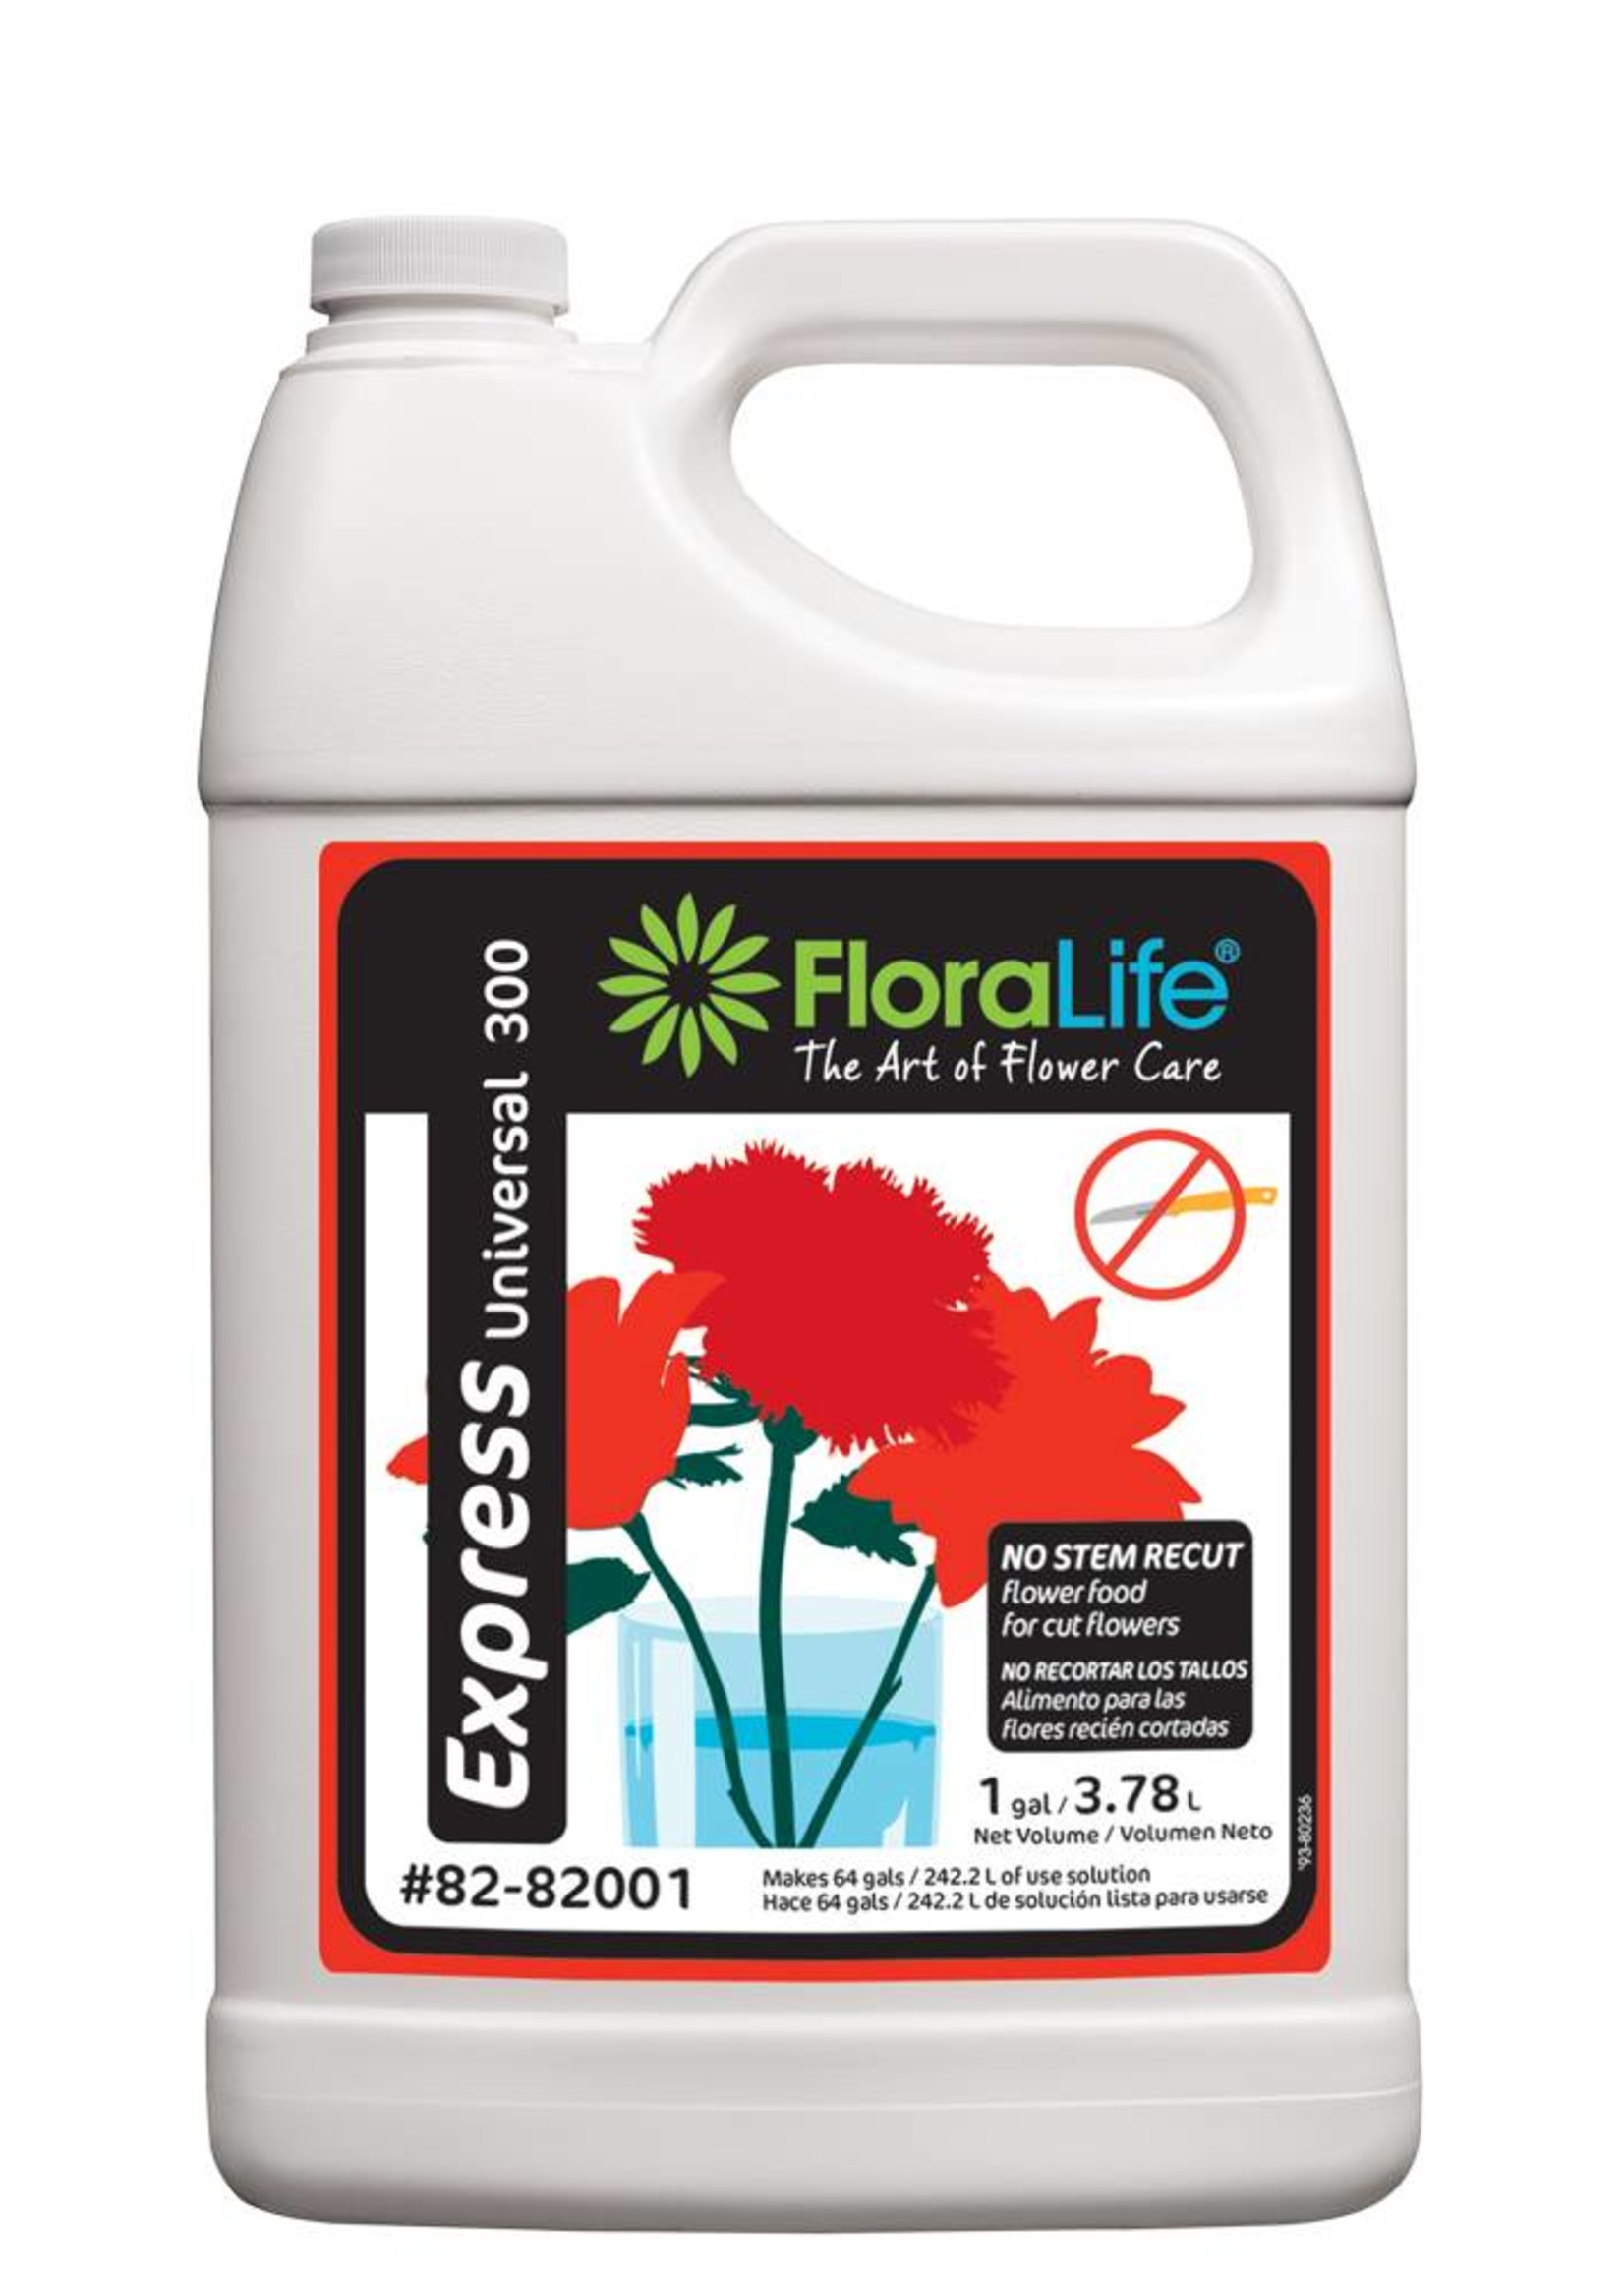 Floralife® Express Universal 300 liquid flower food